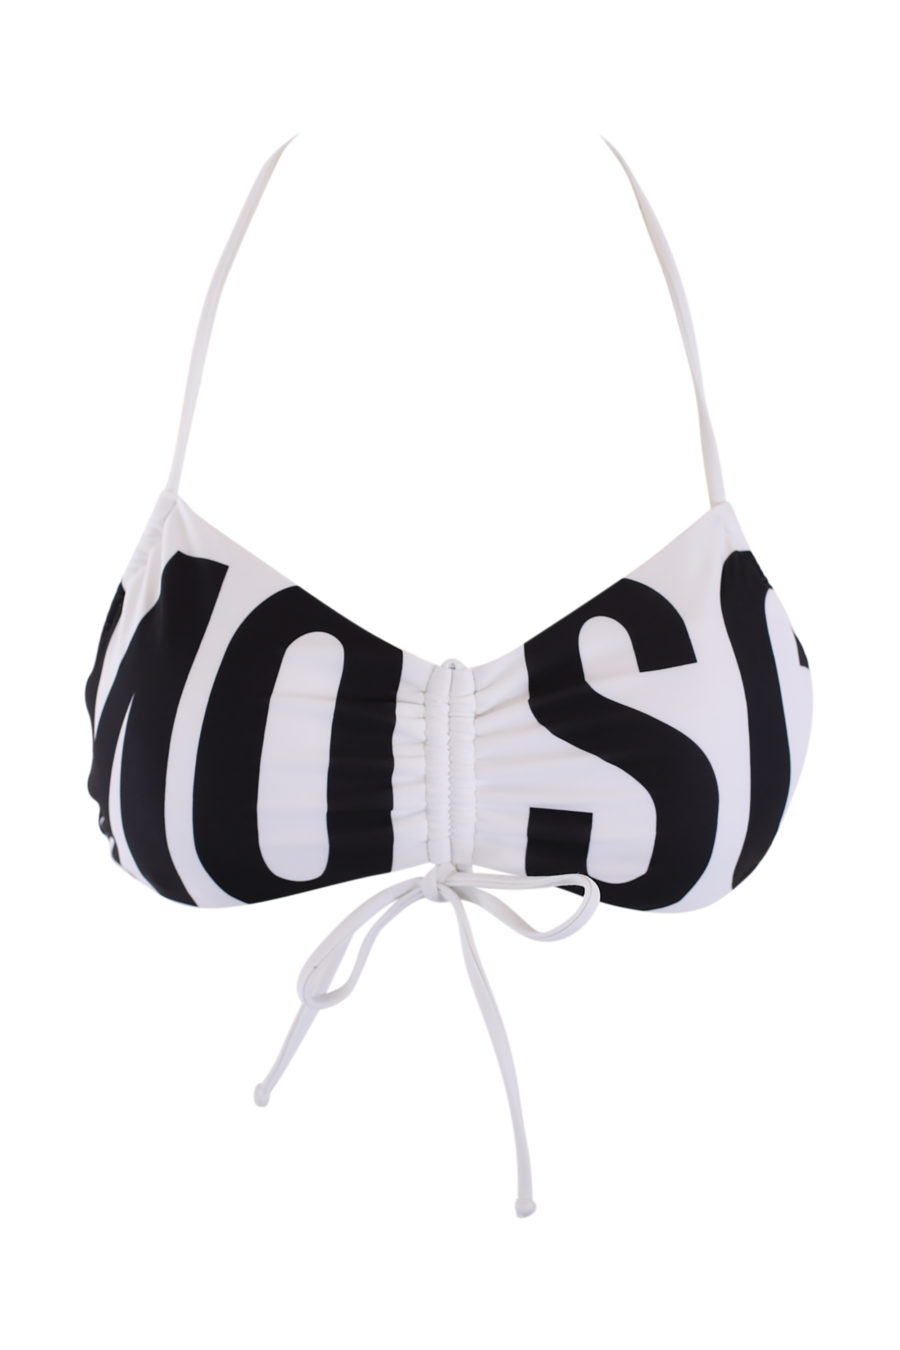 White bikini top with large black logo - IMG 9081